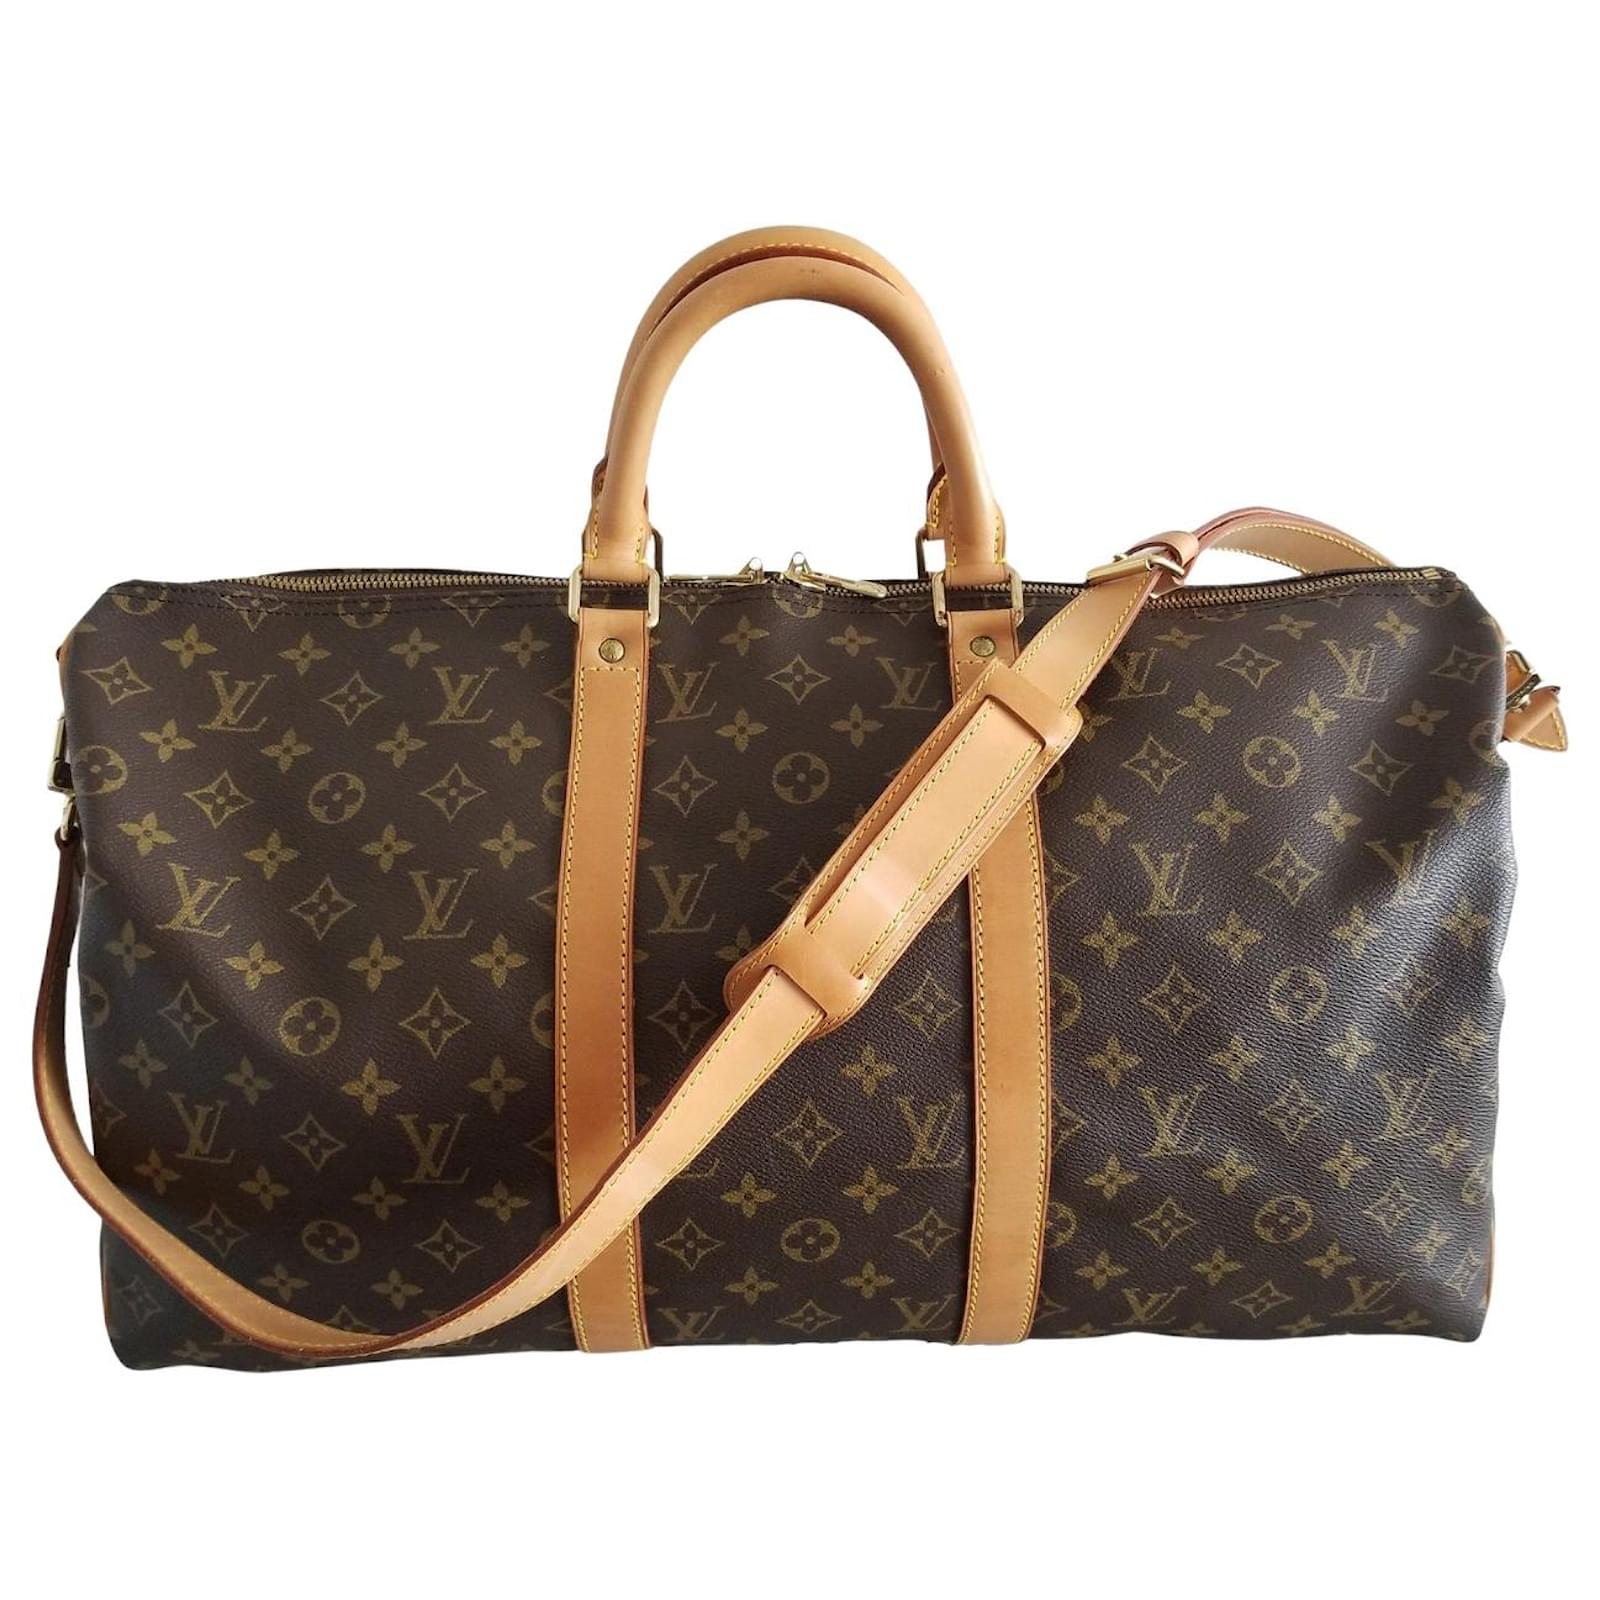 Louis Vuitton Monogram Luggage Duffle Bag